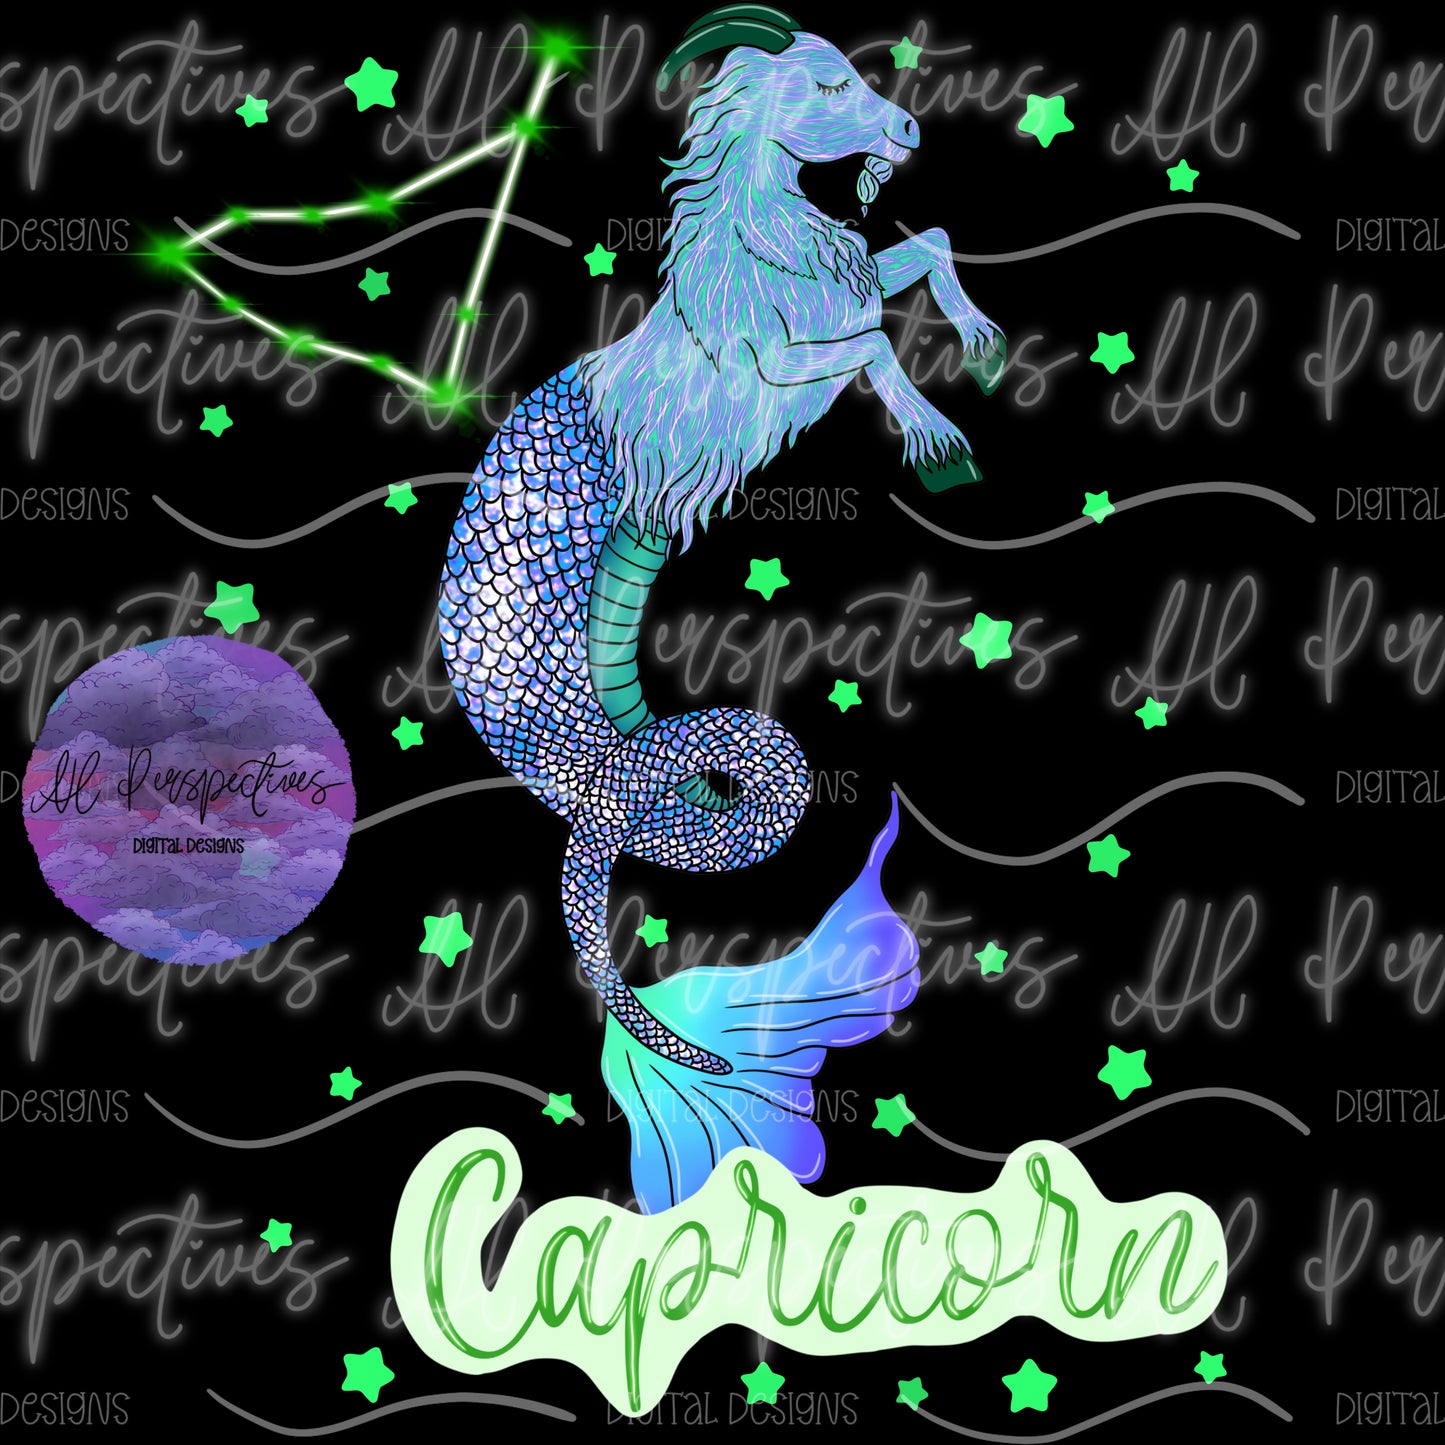 Zodiac Capricorn